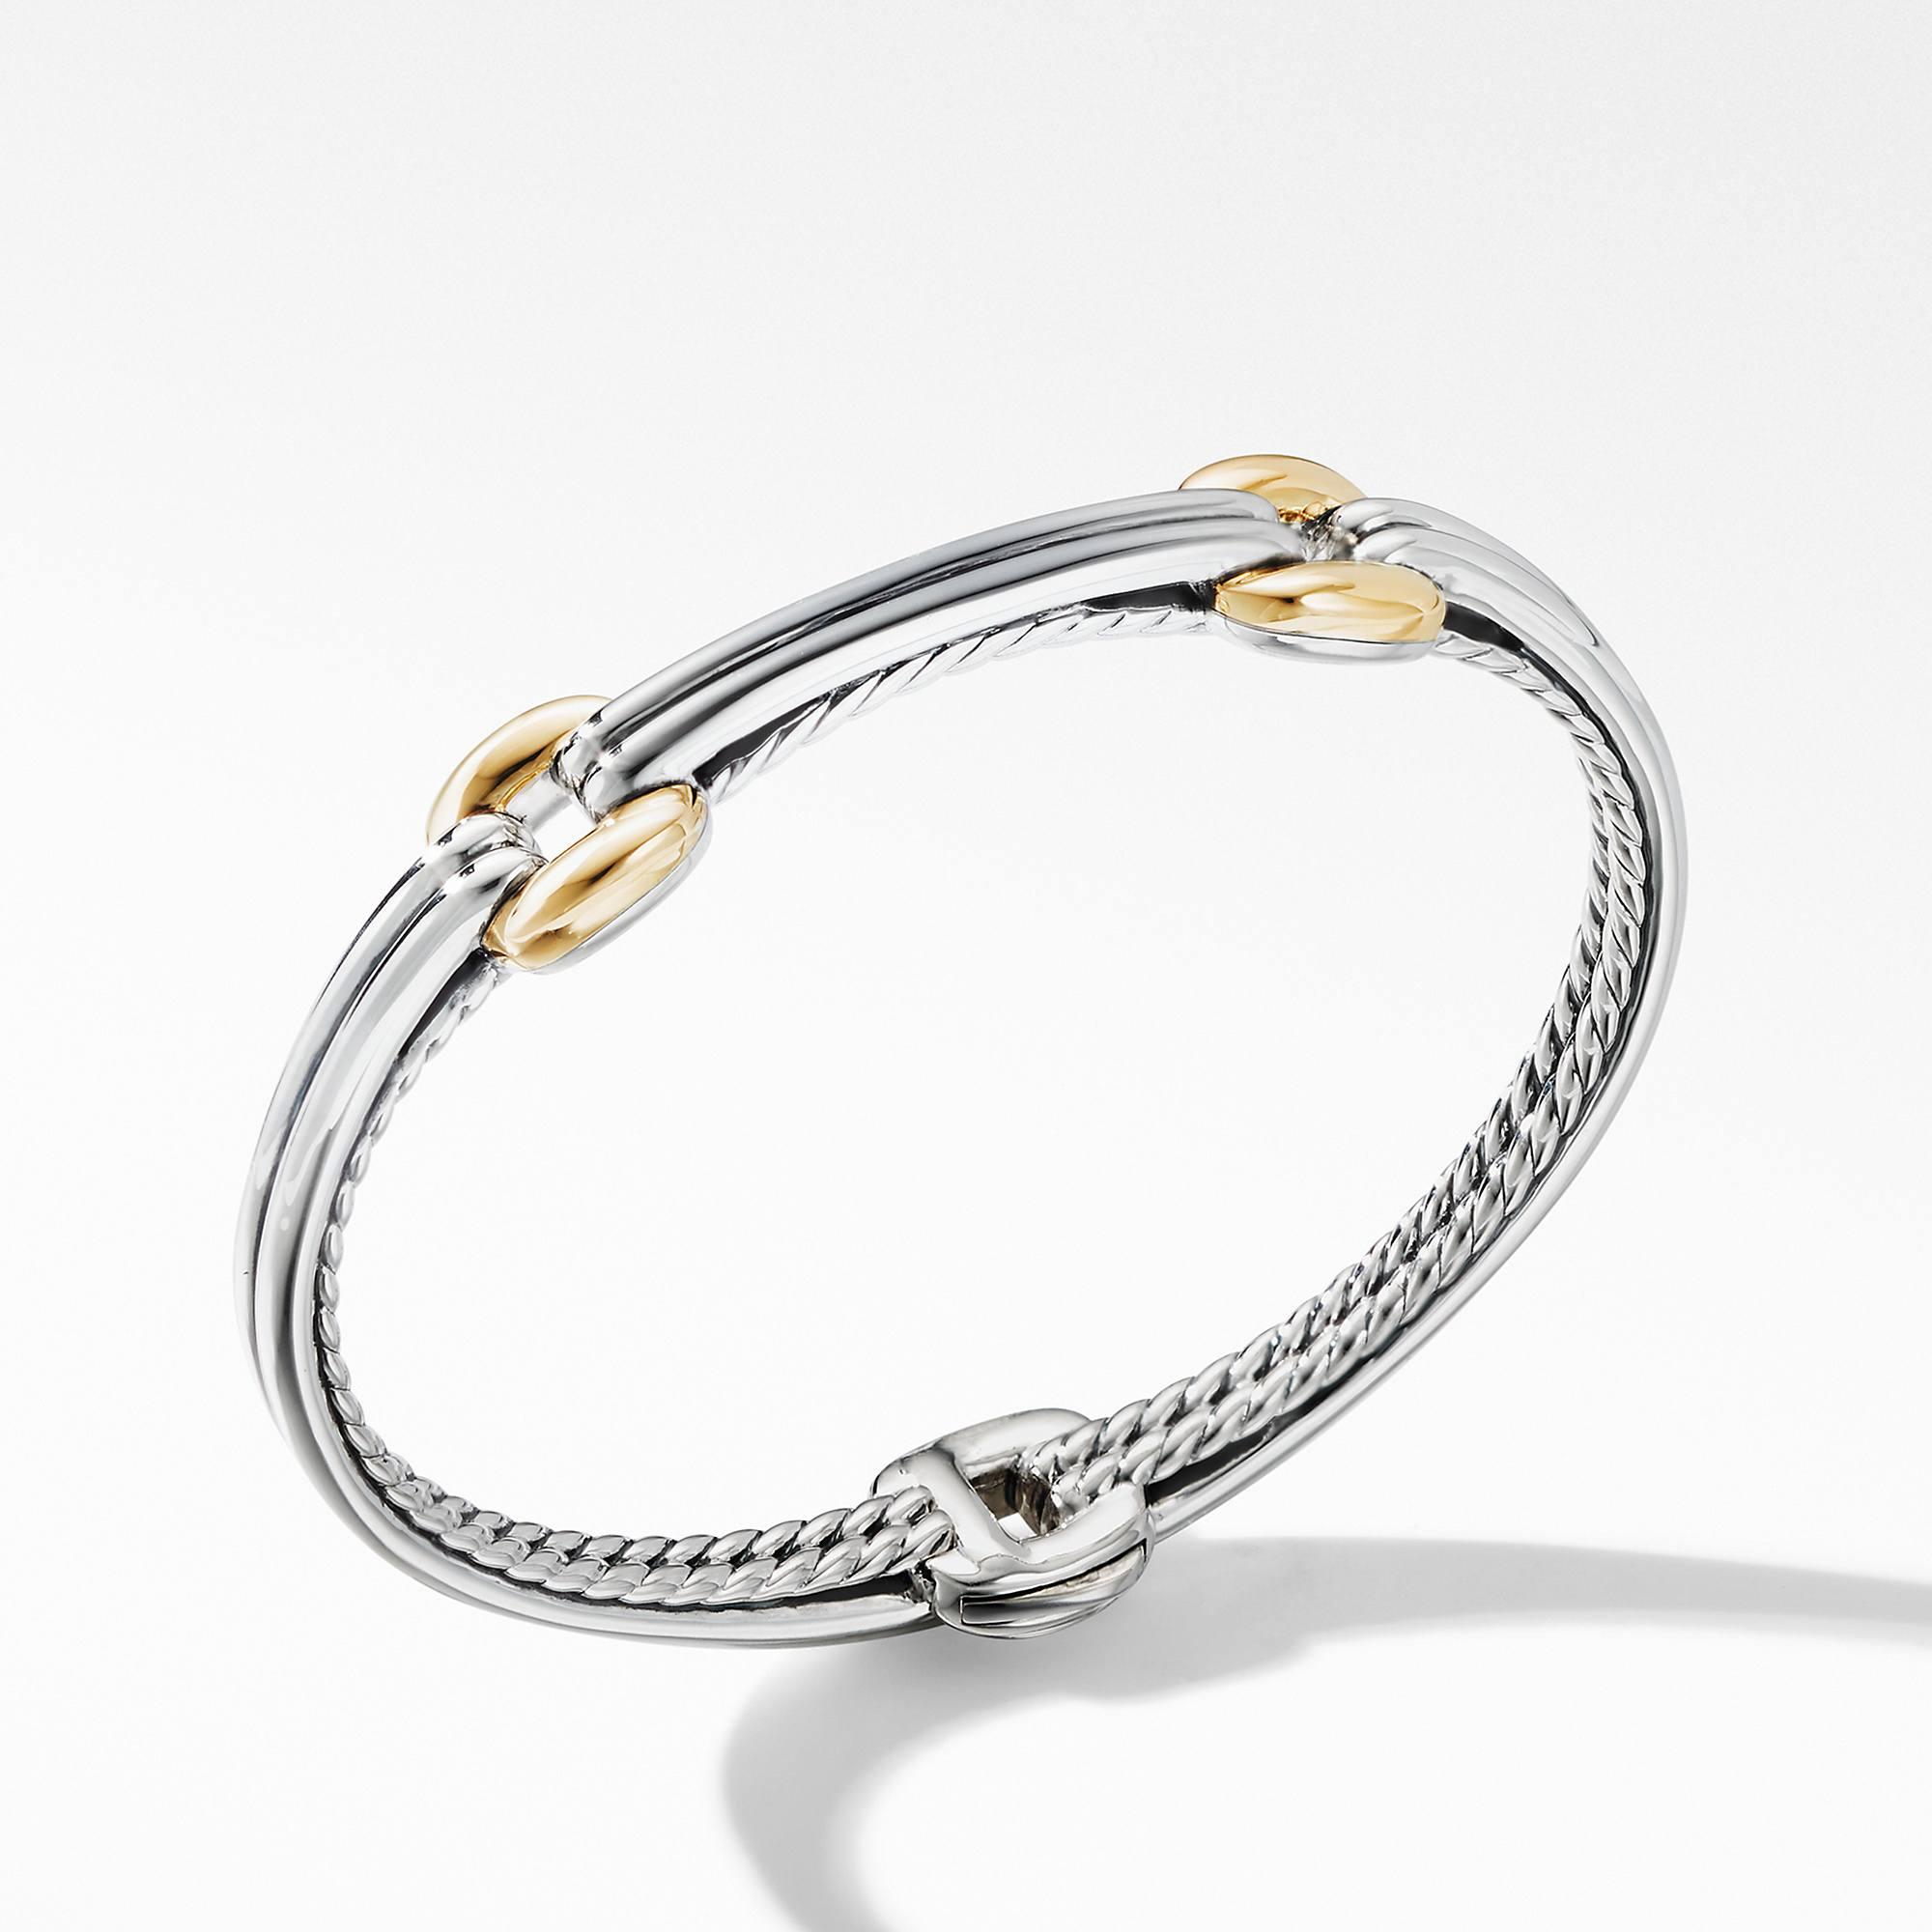 David Yurman Thoroughbred Double Link Bracelet with 18k Yellow Gold